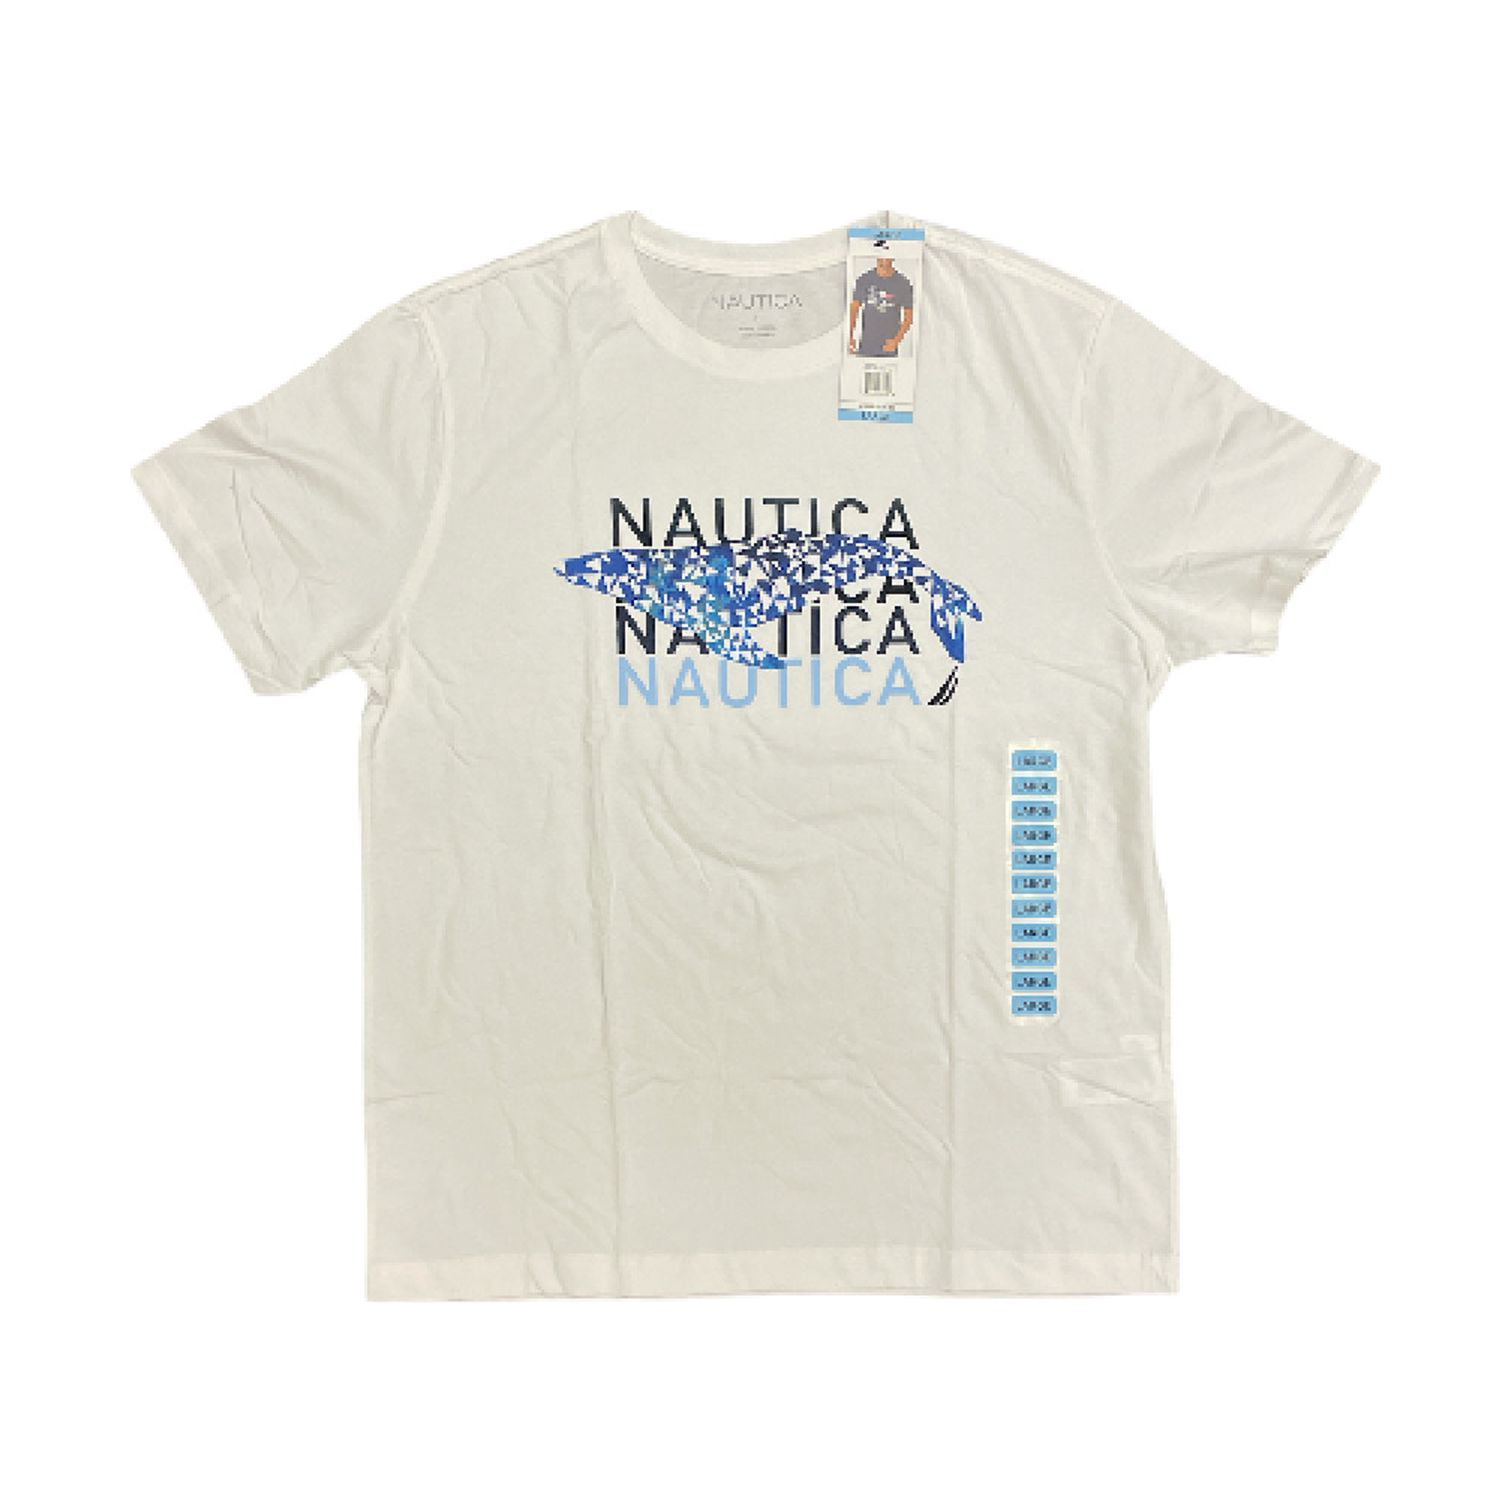 Nautica Men's Cotton Short Sleeve Crew Neck Various Graphic T-Shirt  (Nectarine, L) 